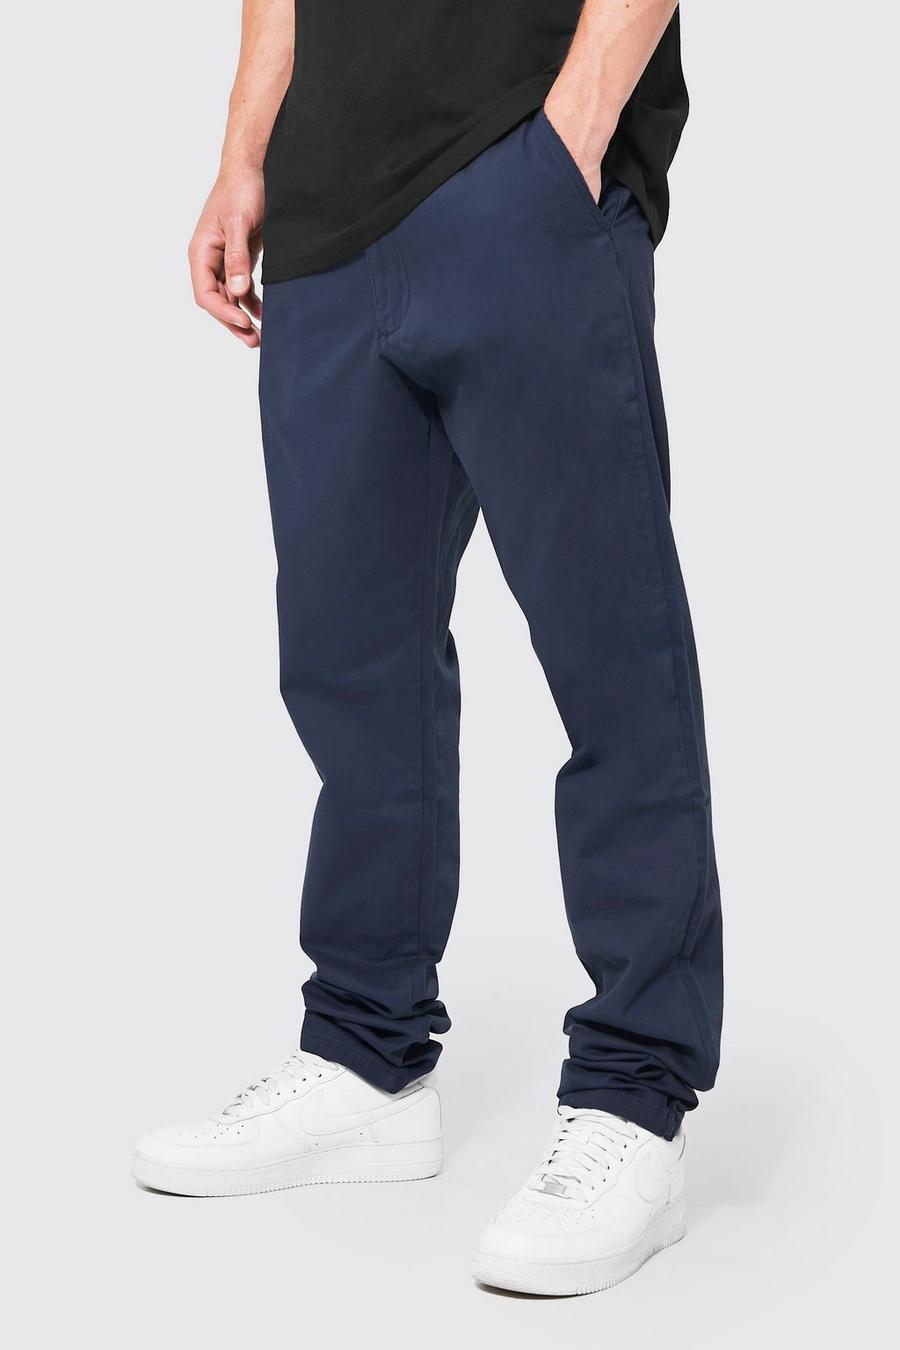 Pantalón Tall chino ajustado, Navy azul marino